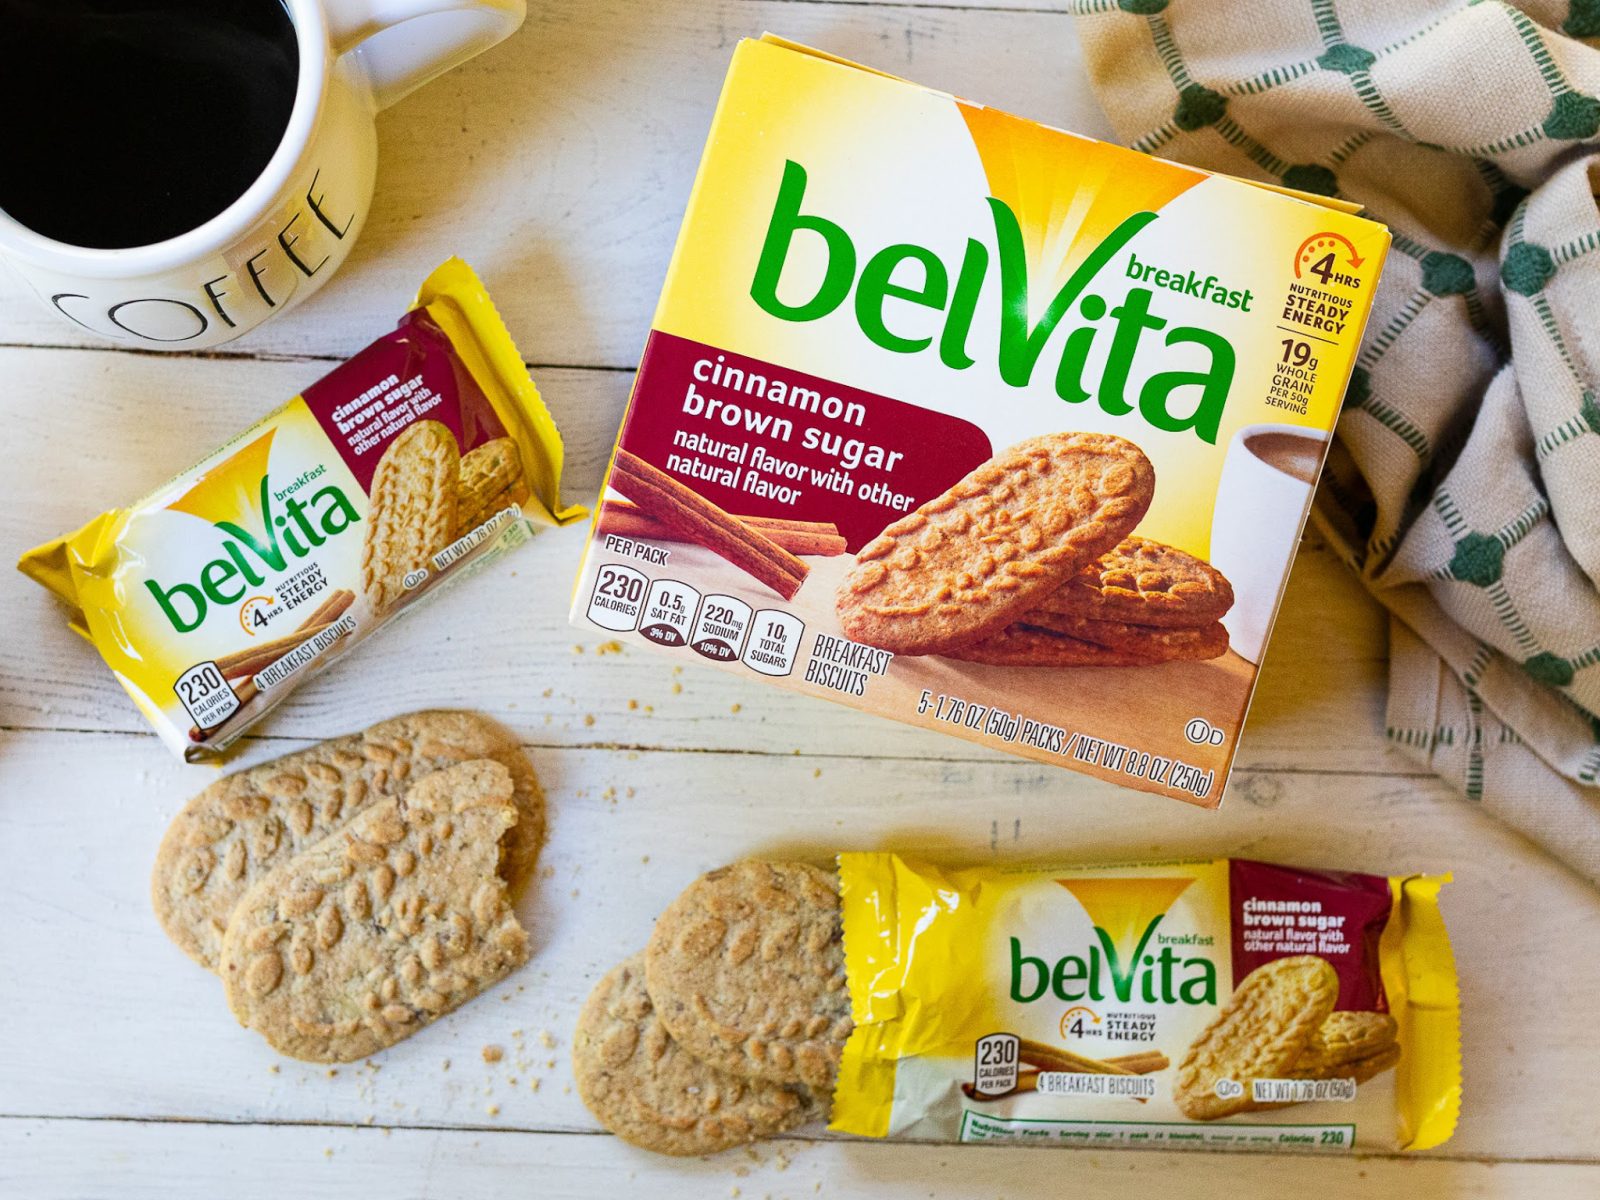 Nice Discount On Nabisco belVita Breakfast Biscuits At Kroger – Just $1.50 Per Box